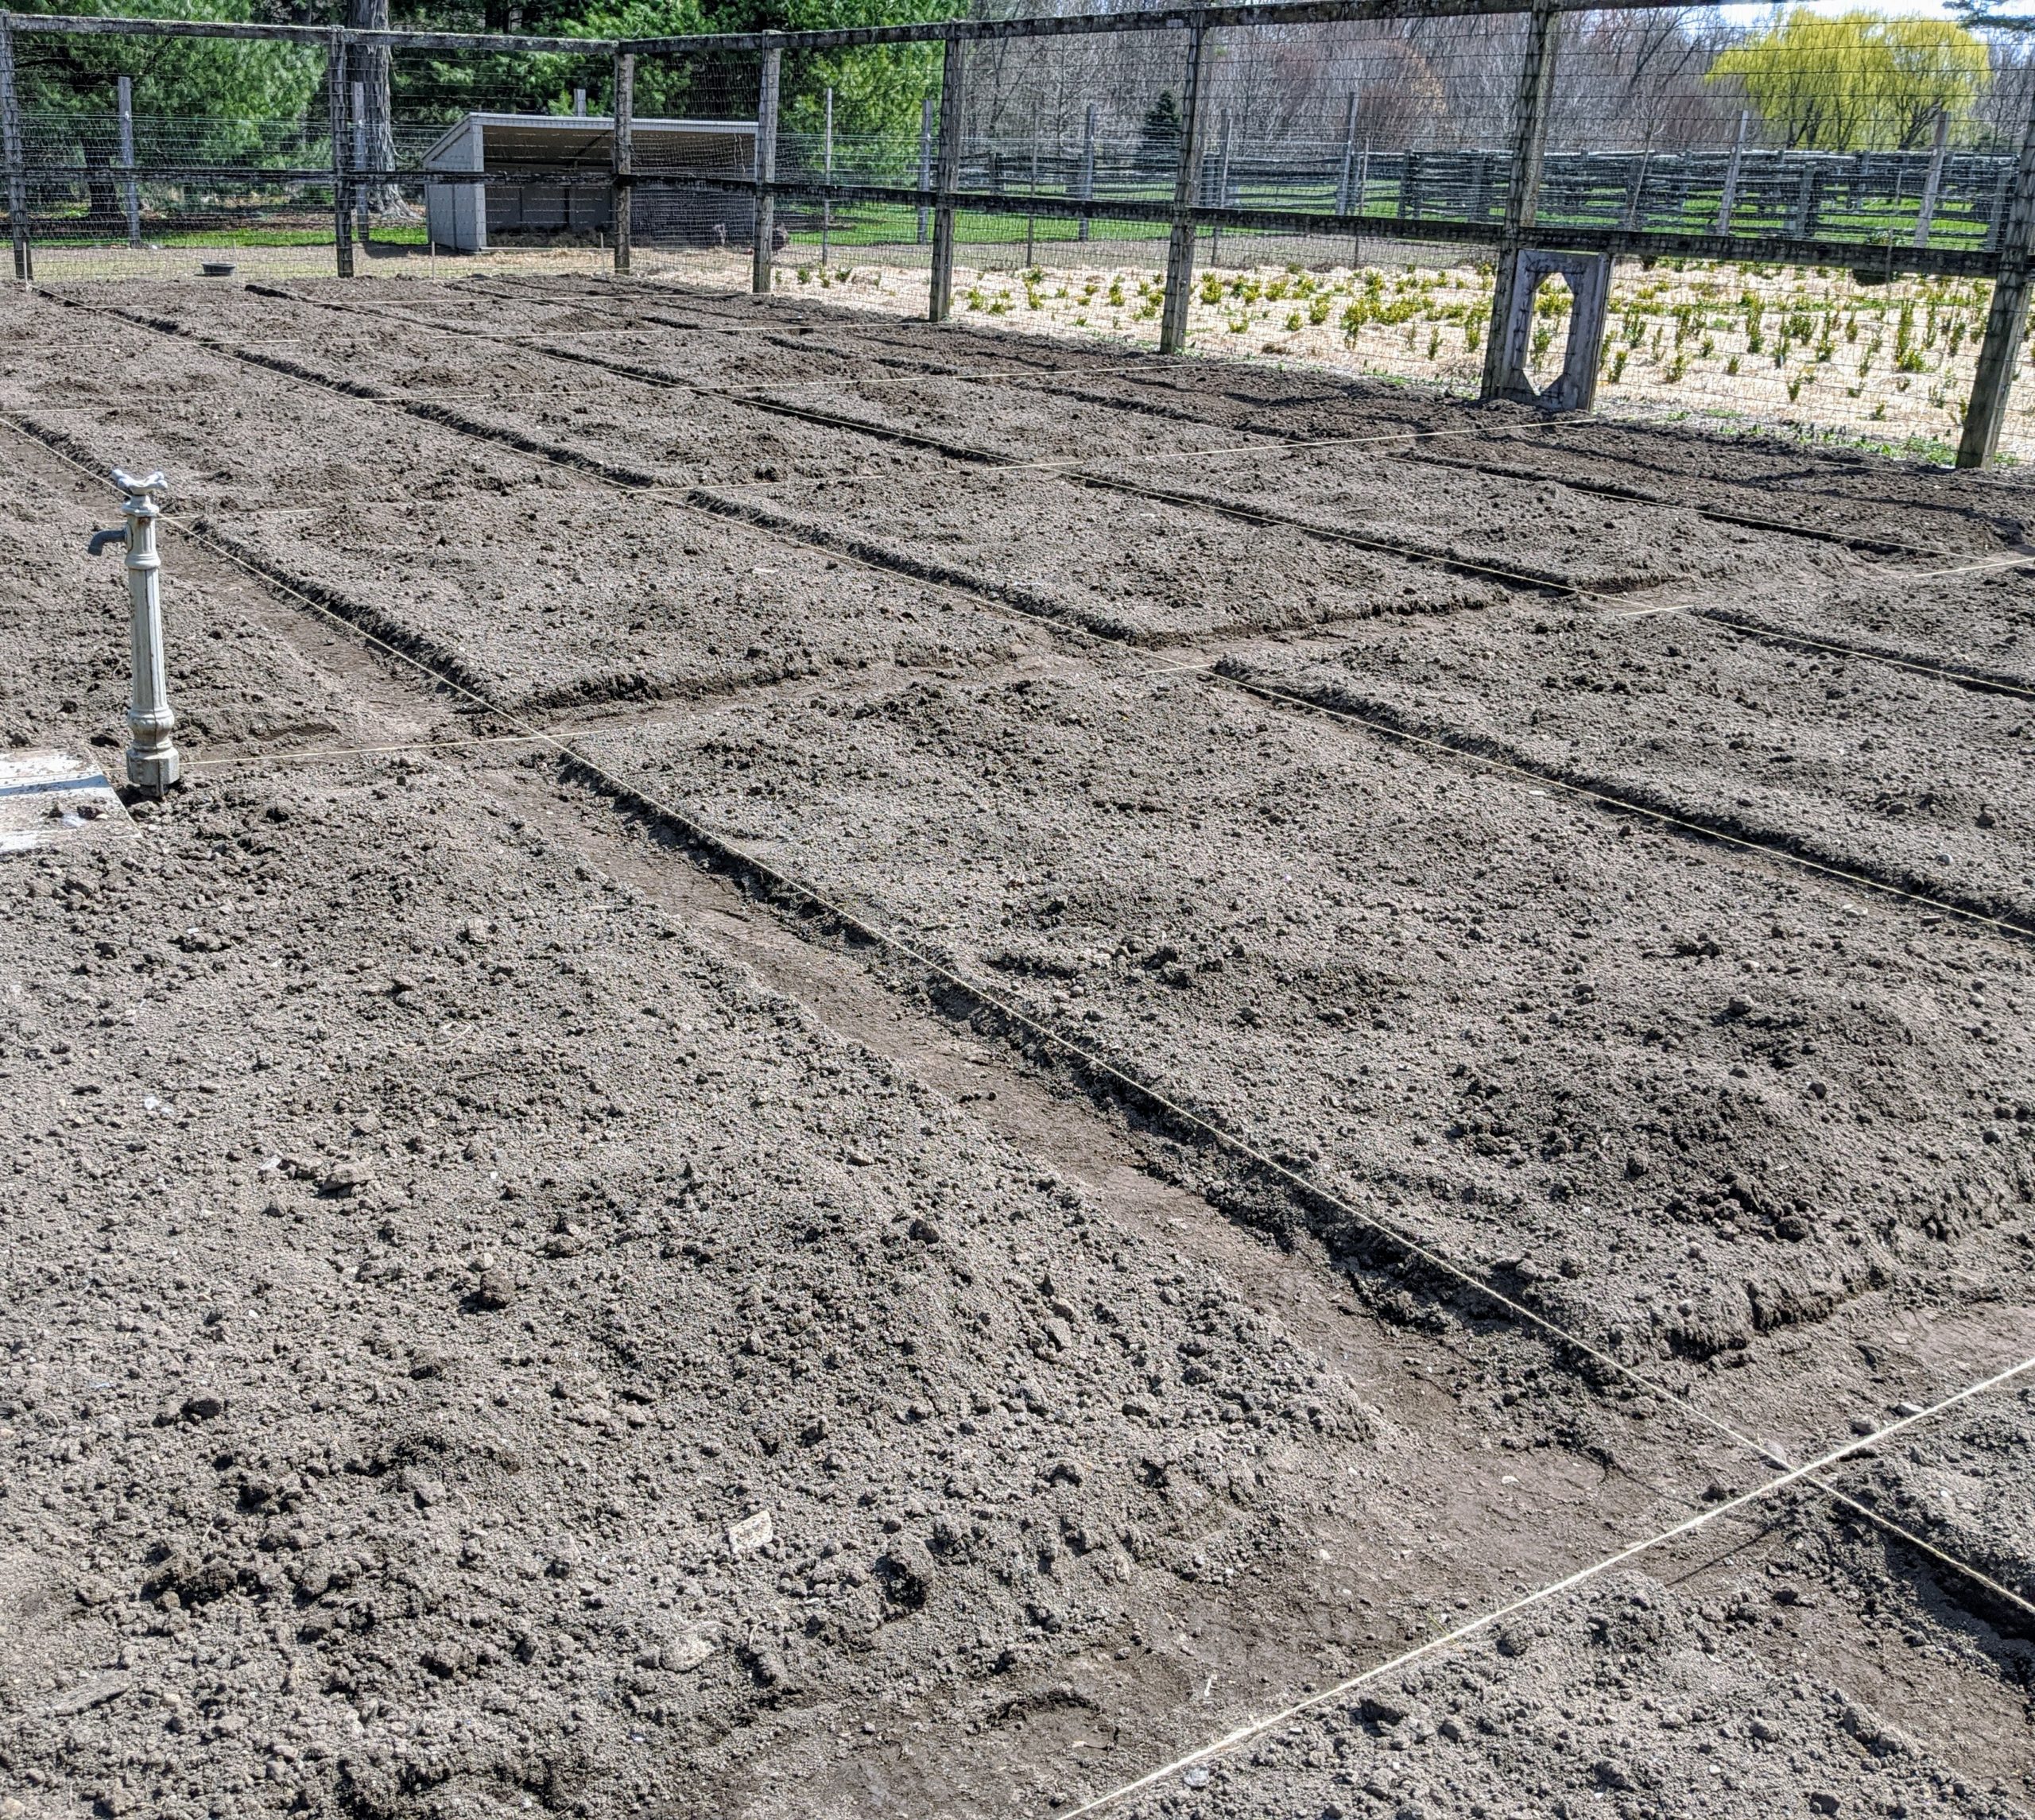 Preparing the Vegetable Garden at My Farm - The Martha Stewart Blog